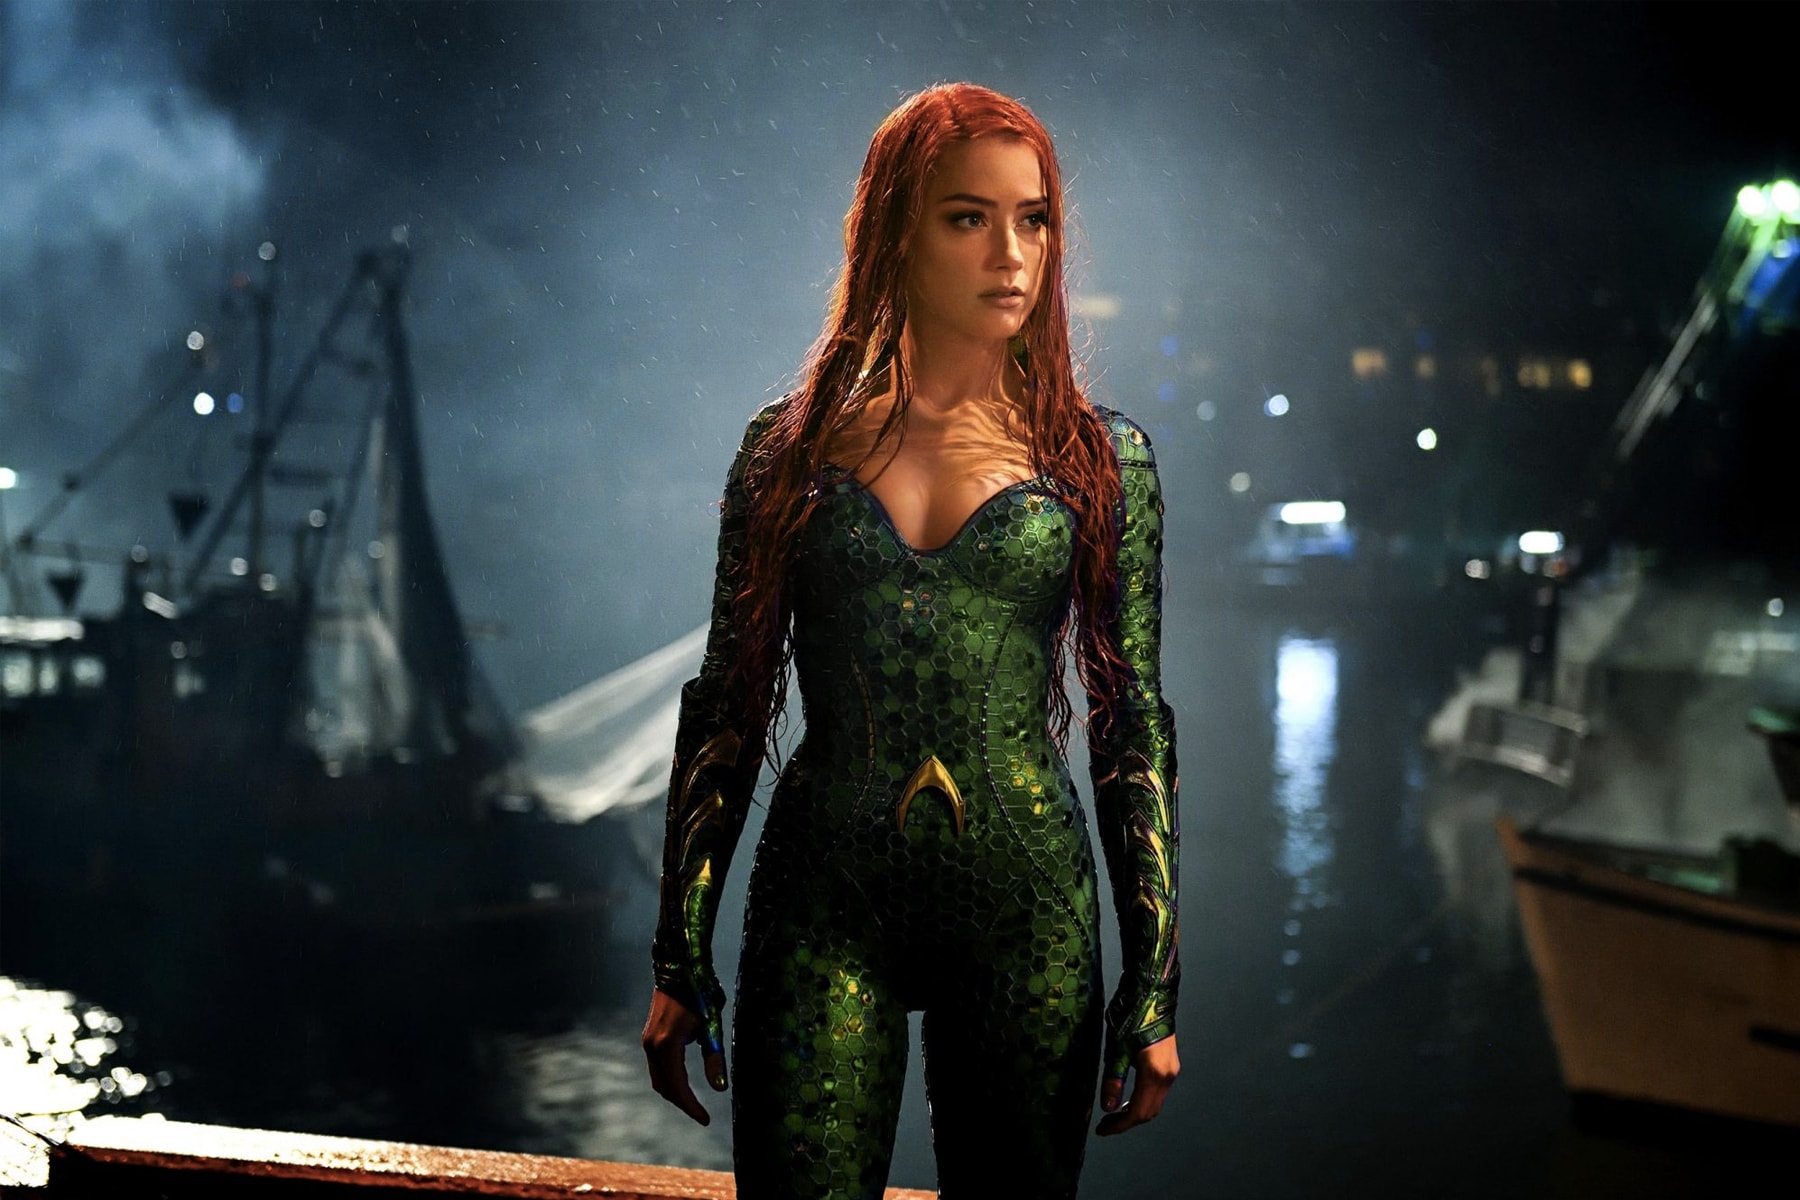 Johnny Depp 前妻 Amber Heard 親口證實她將回歸《Aquaman 水行俠 2》